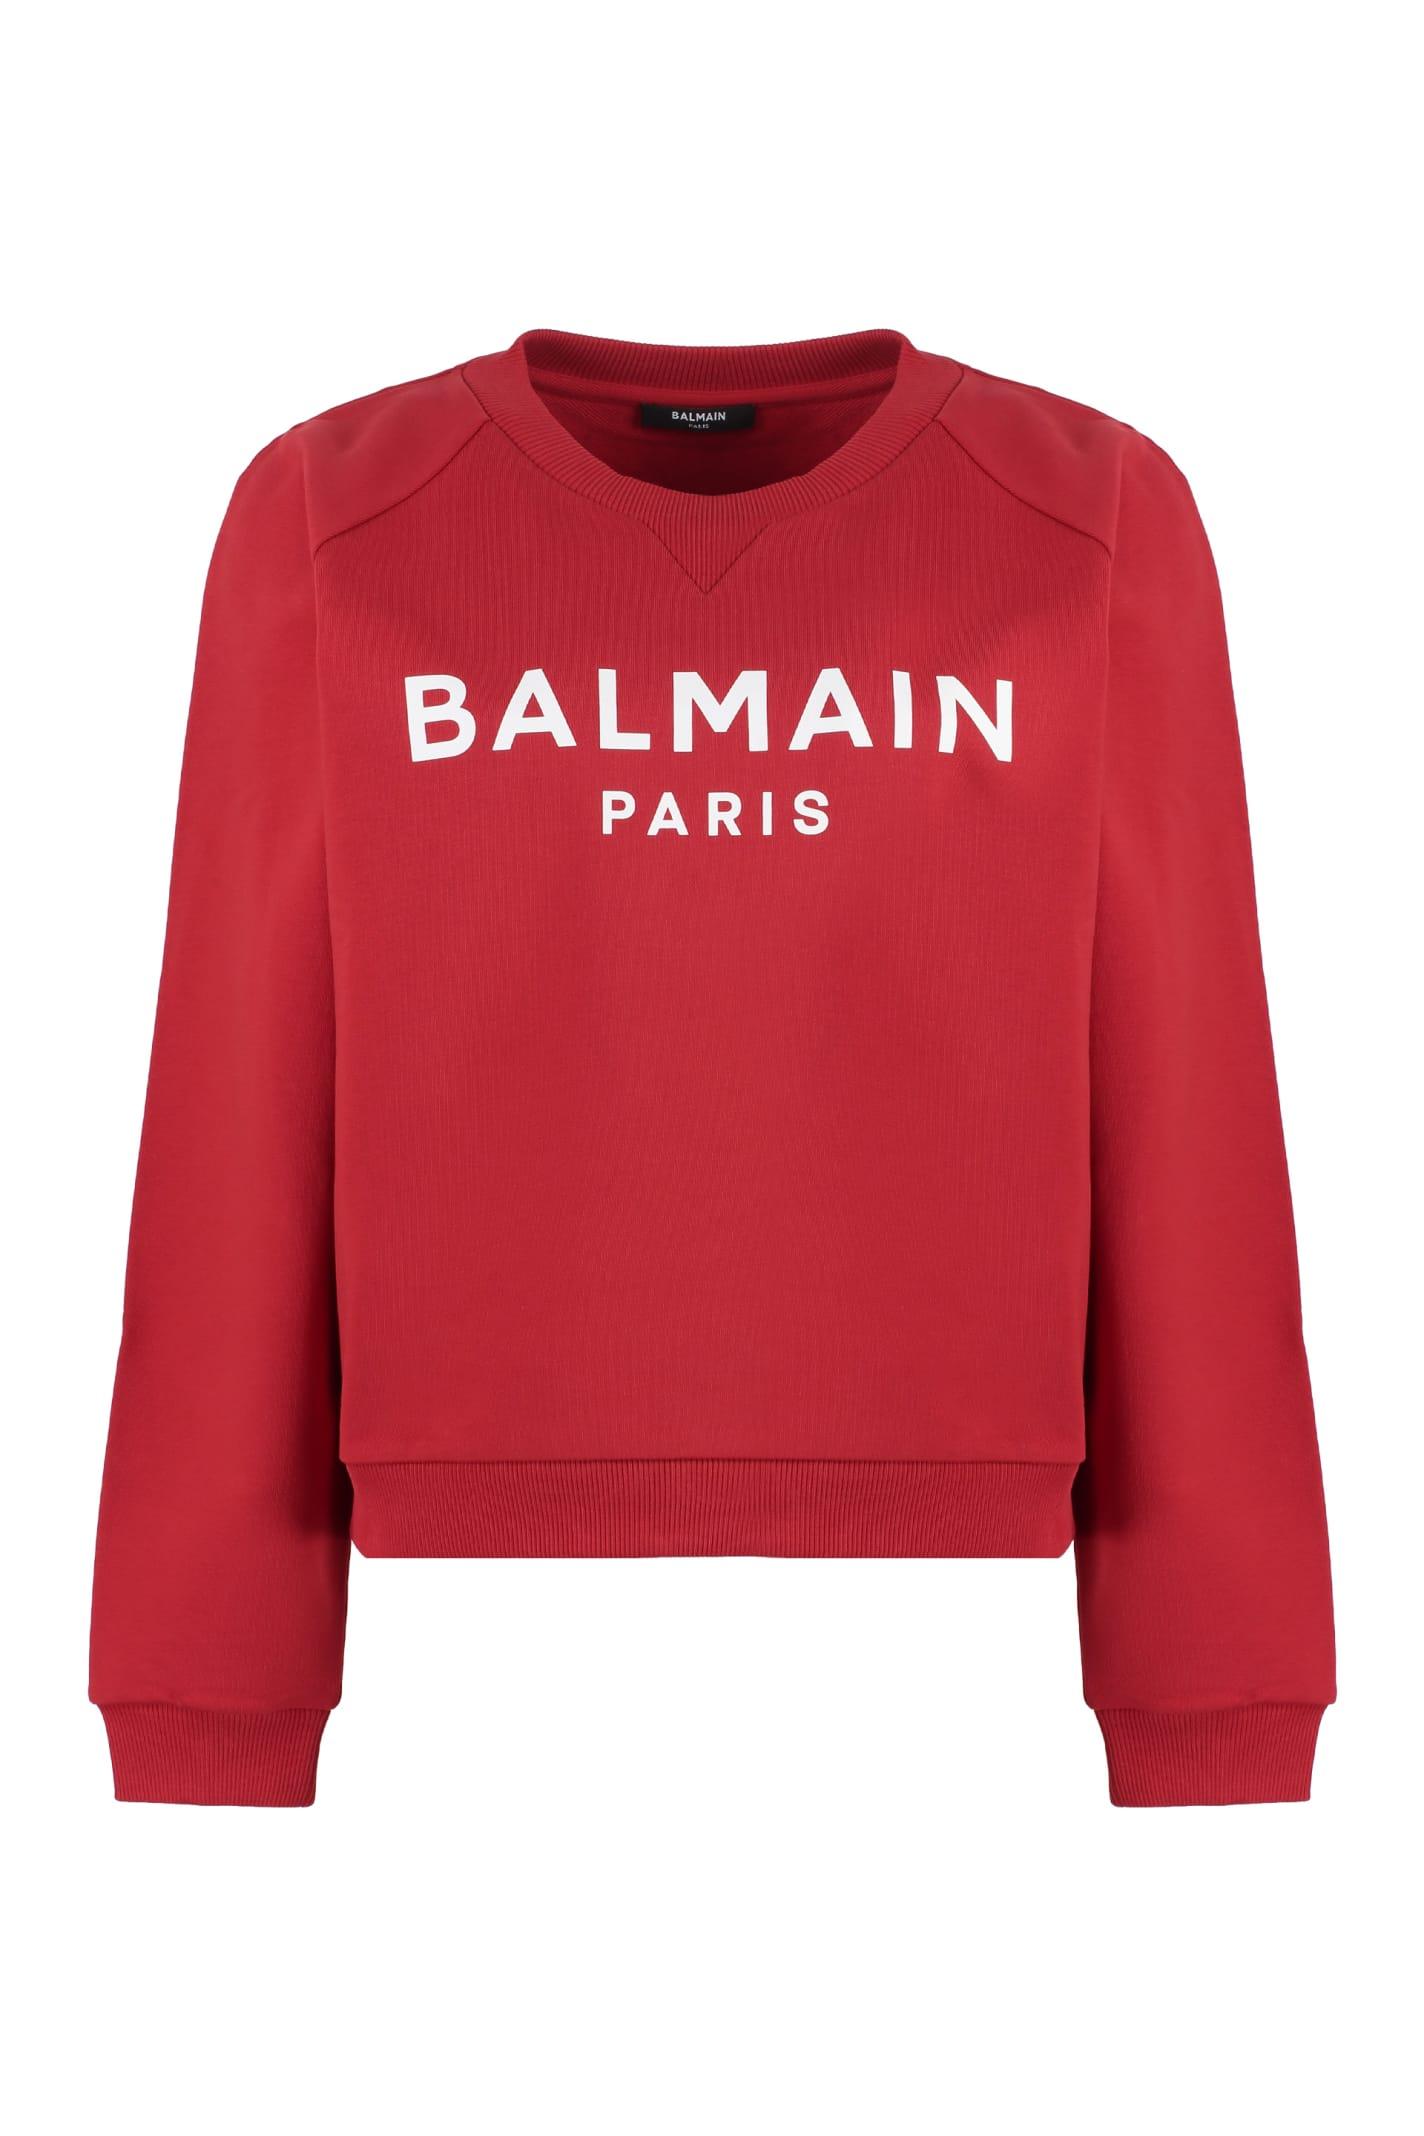 Balmain Logo Detail Cotton Sweatshirt in Red | Lyst